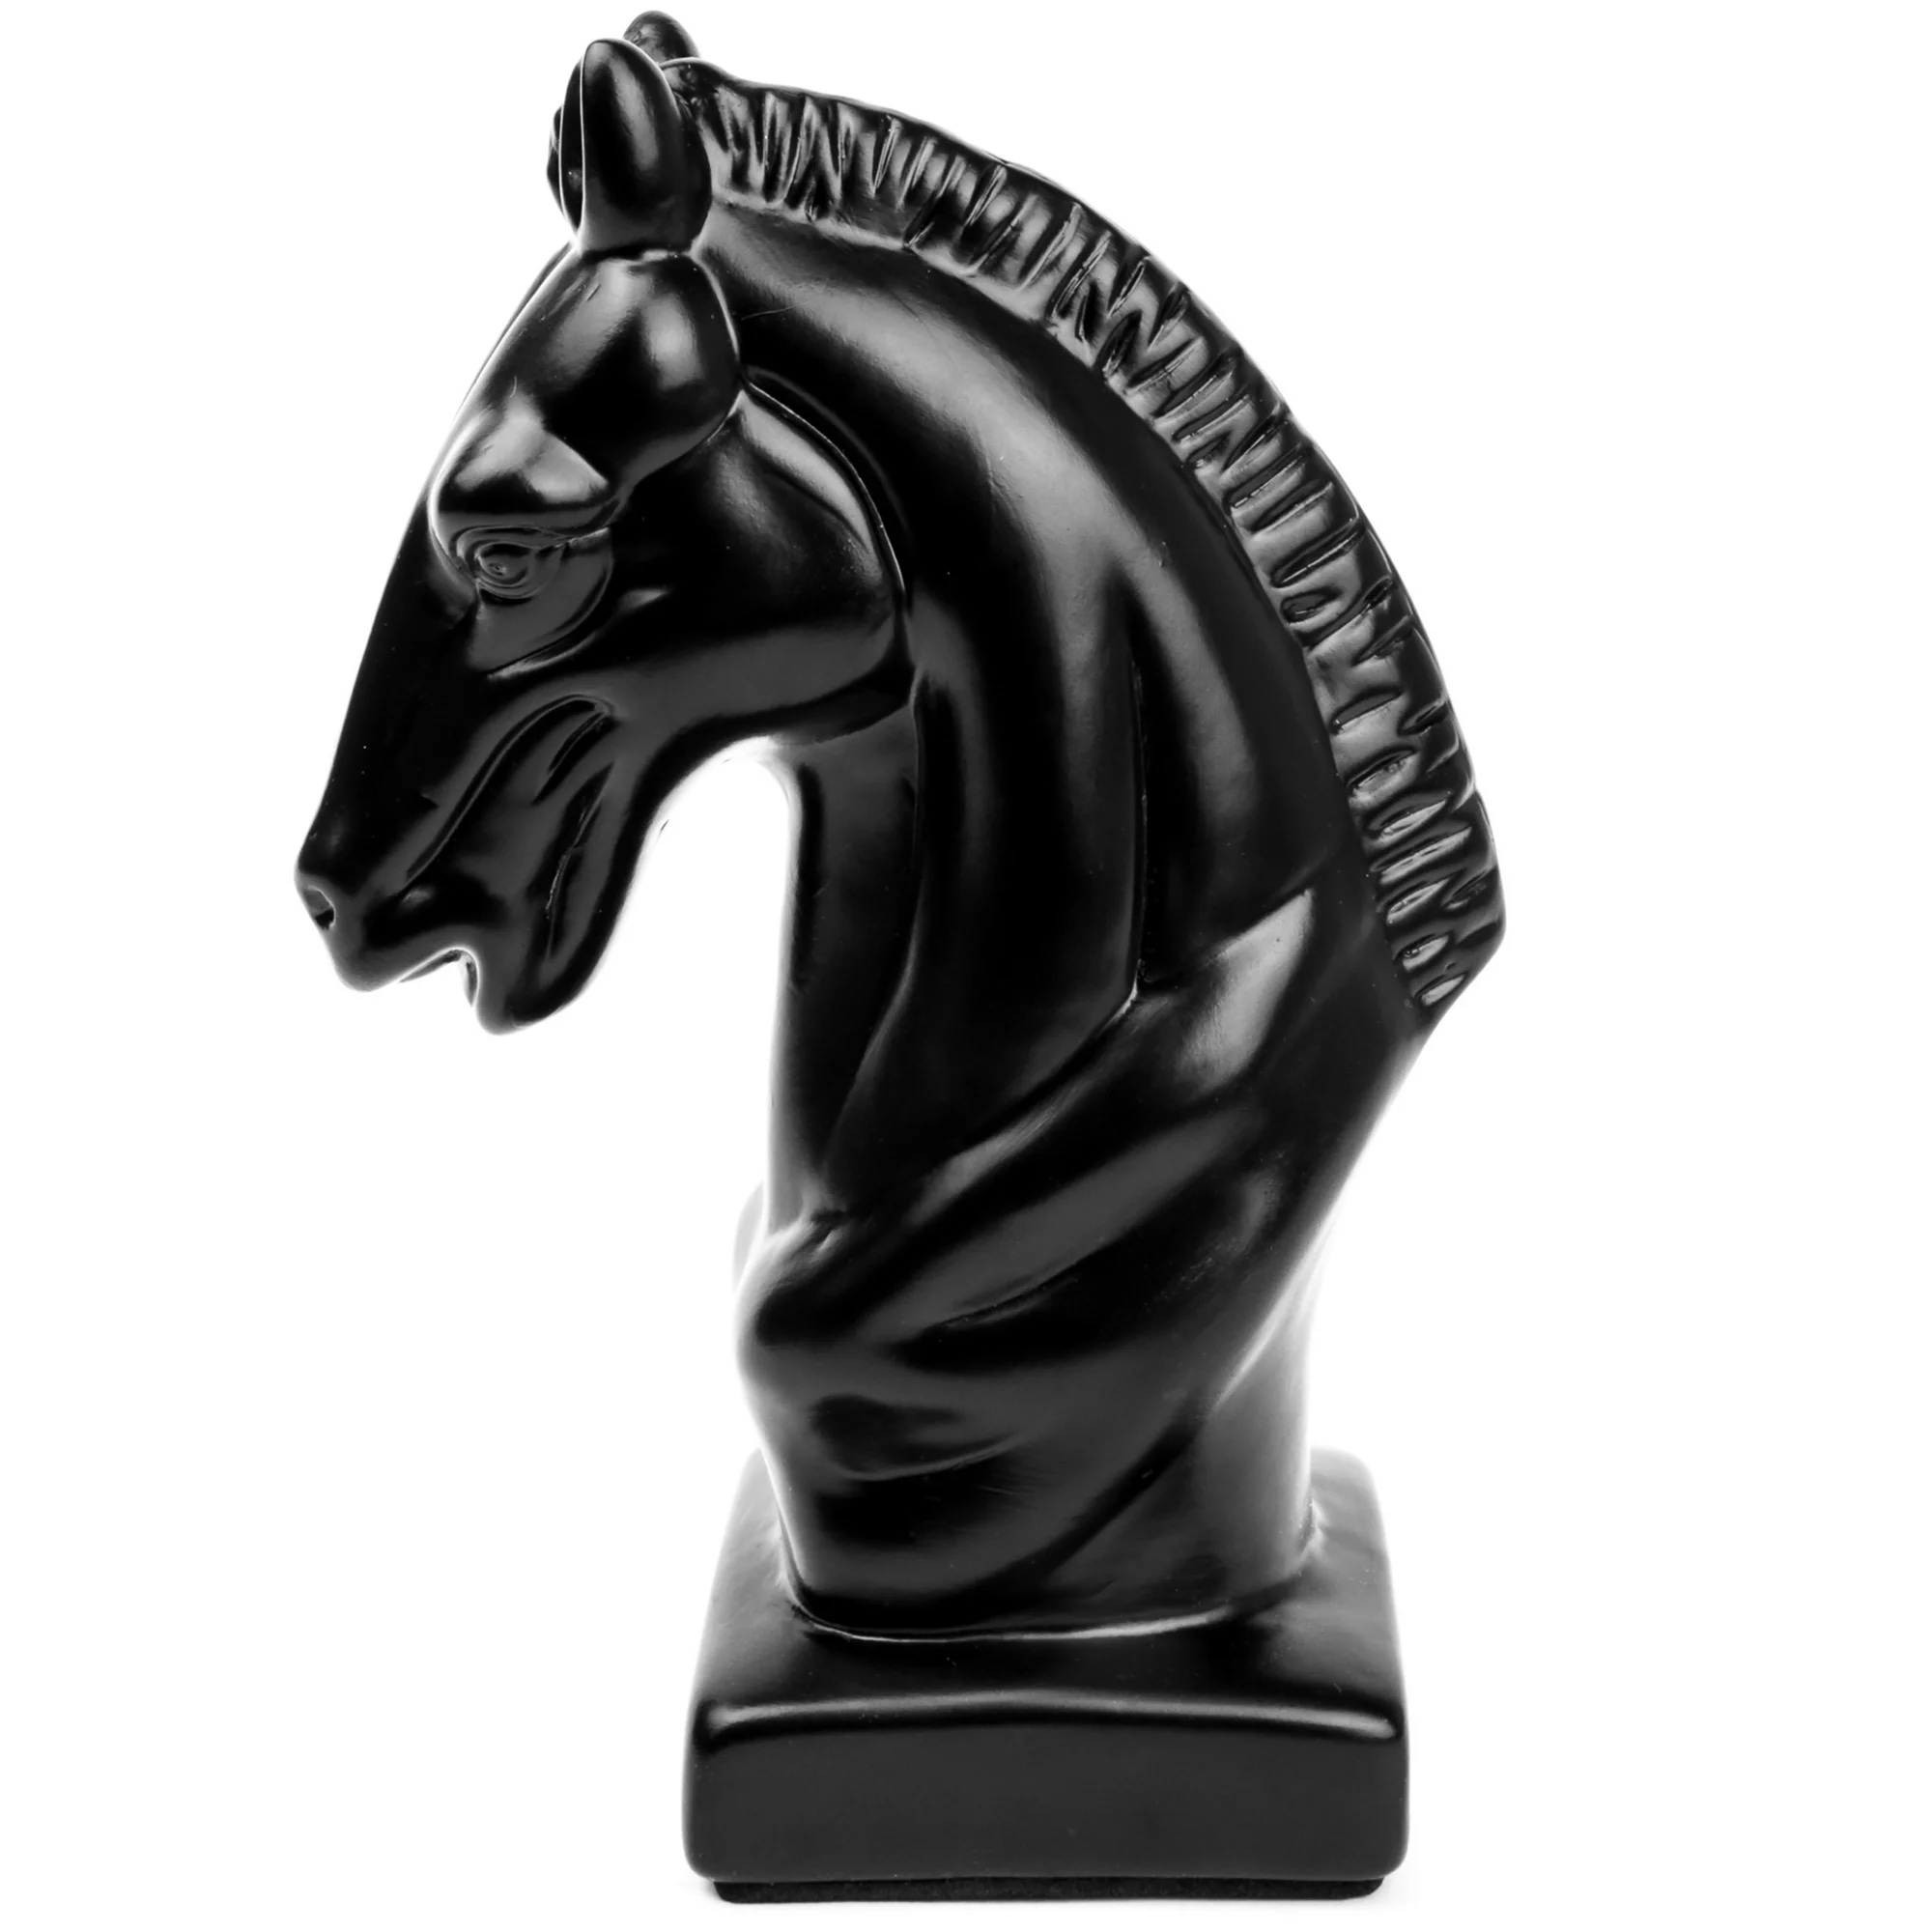 The glossy black horse ceramic figurine.